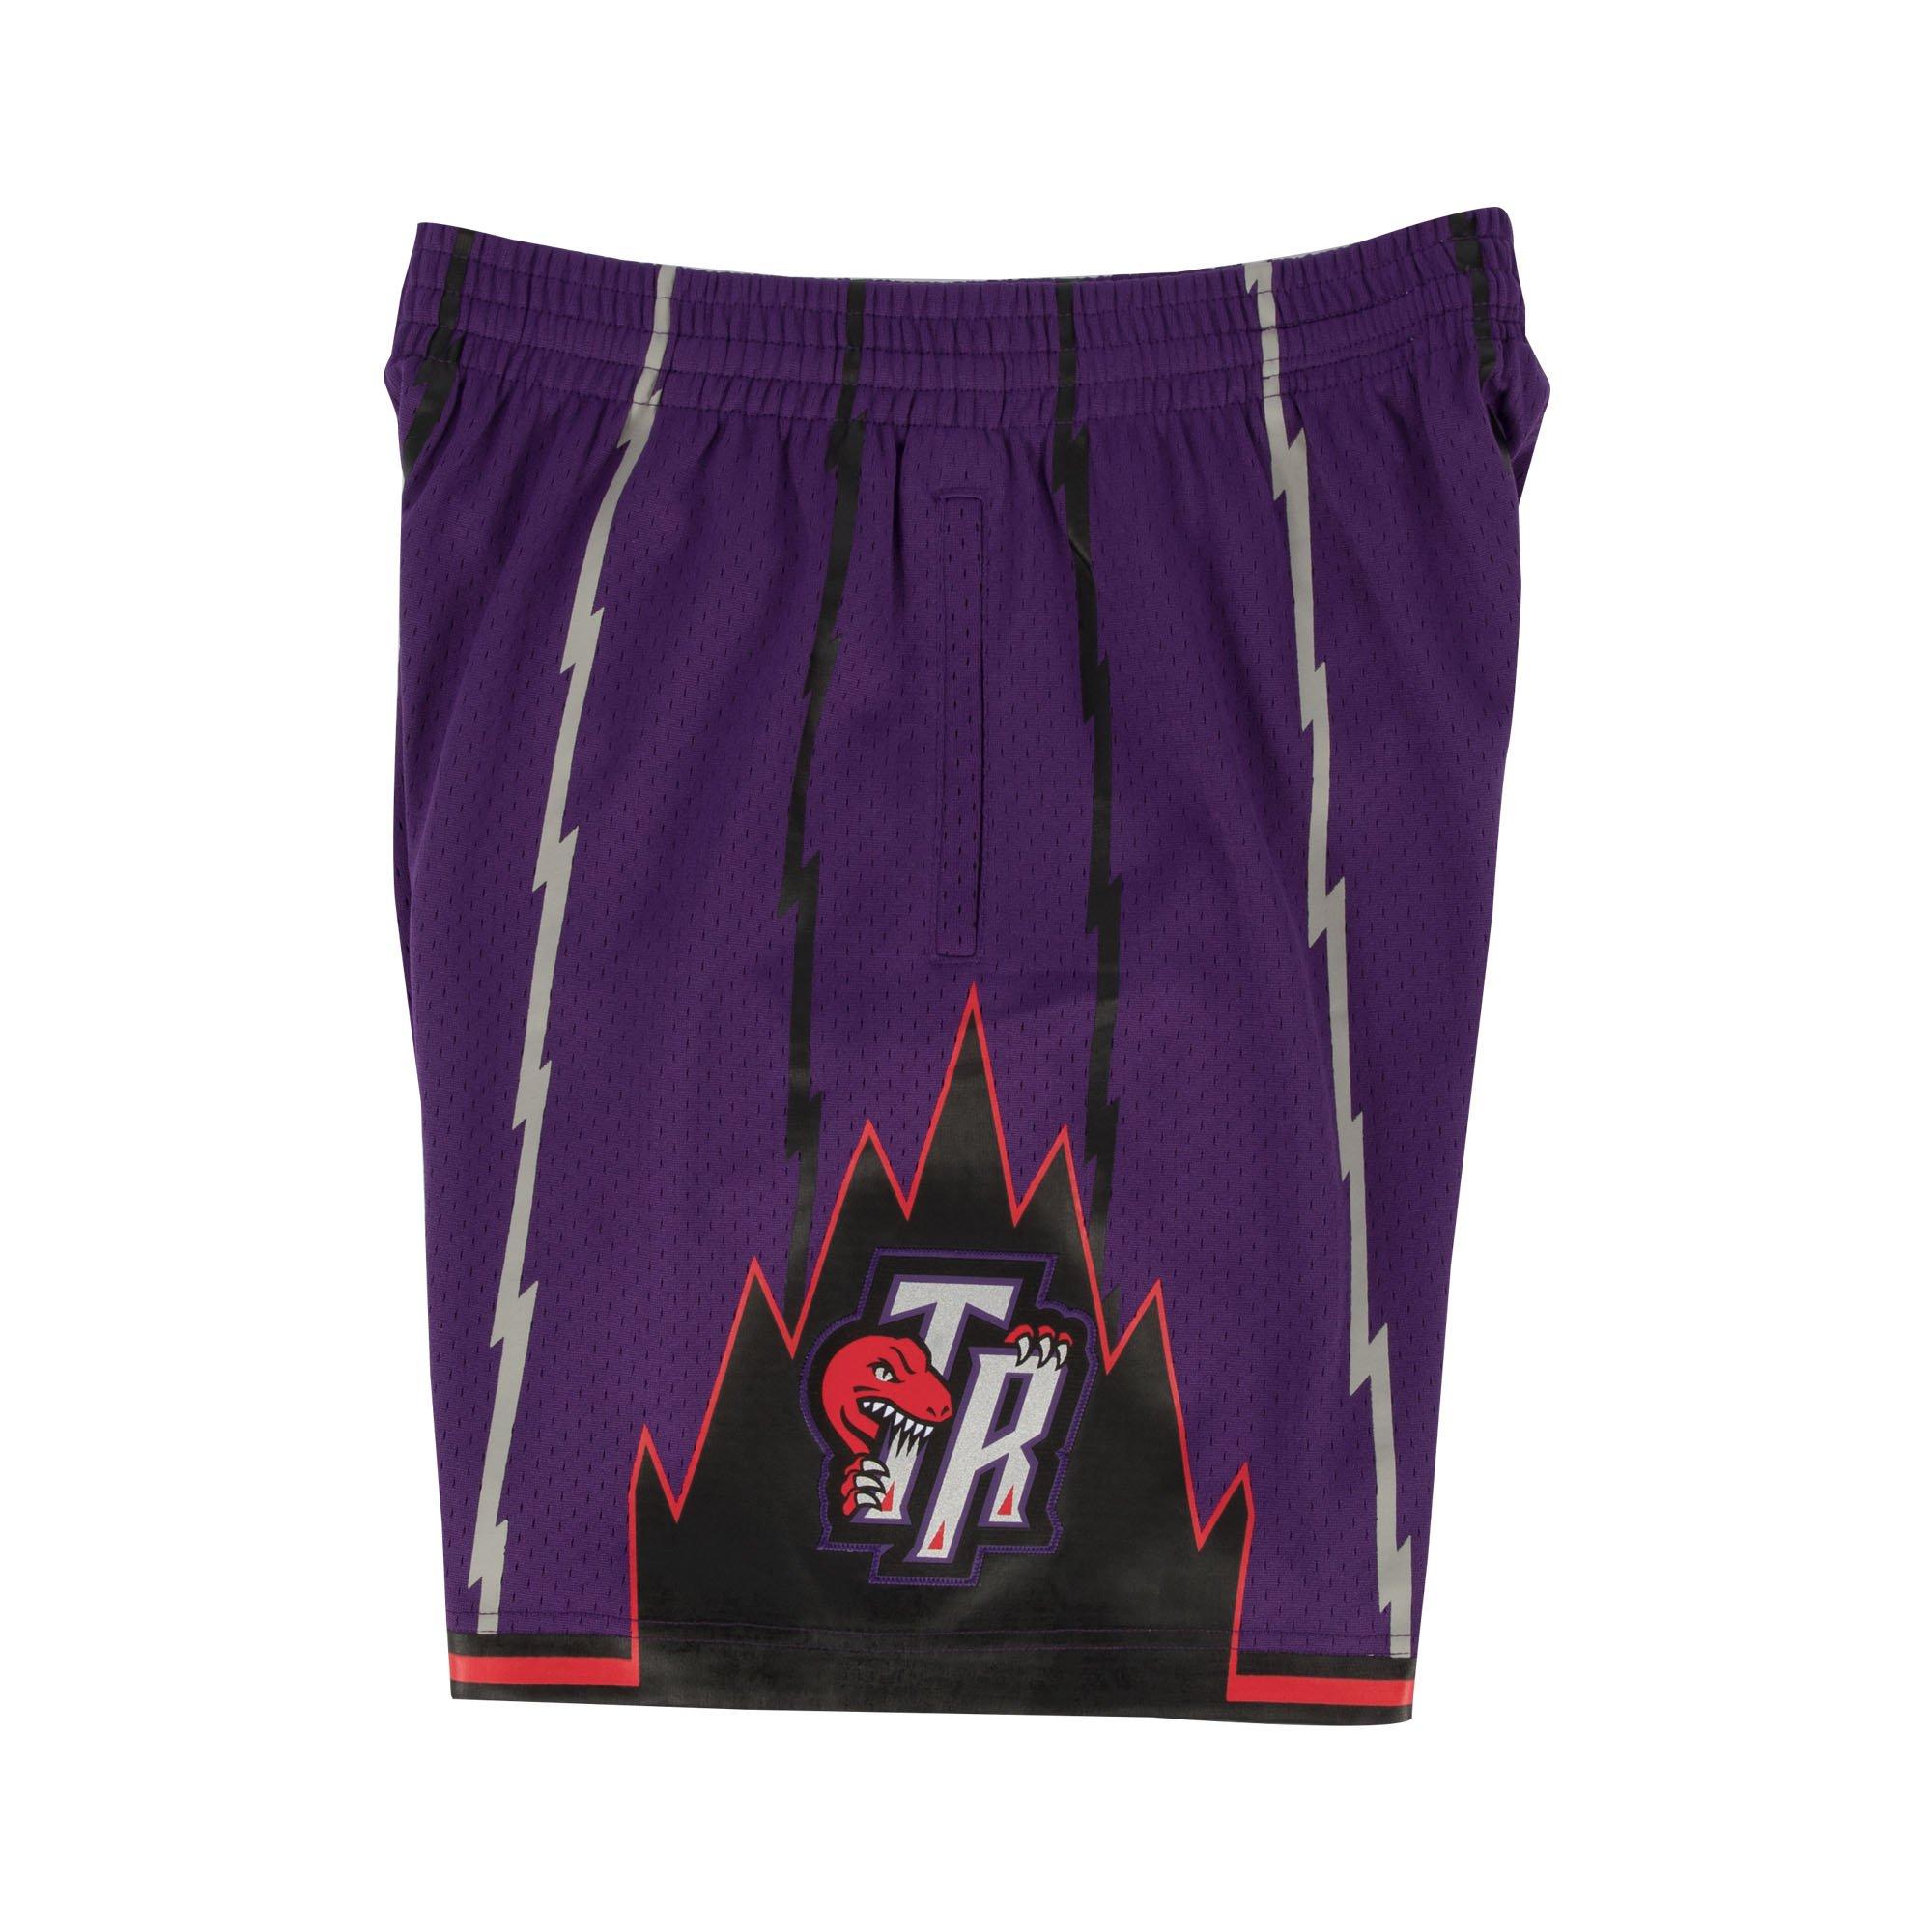 Toronto Raptors Basketball Game Shorts Vintage NWT Stitched Men's Short Pants